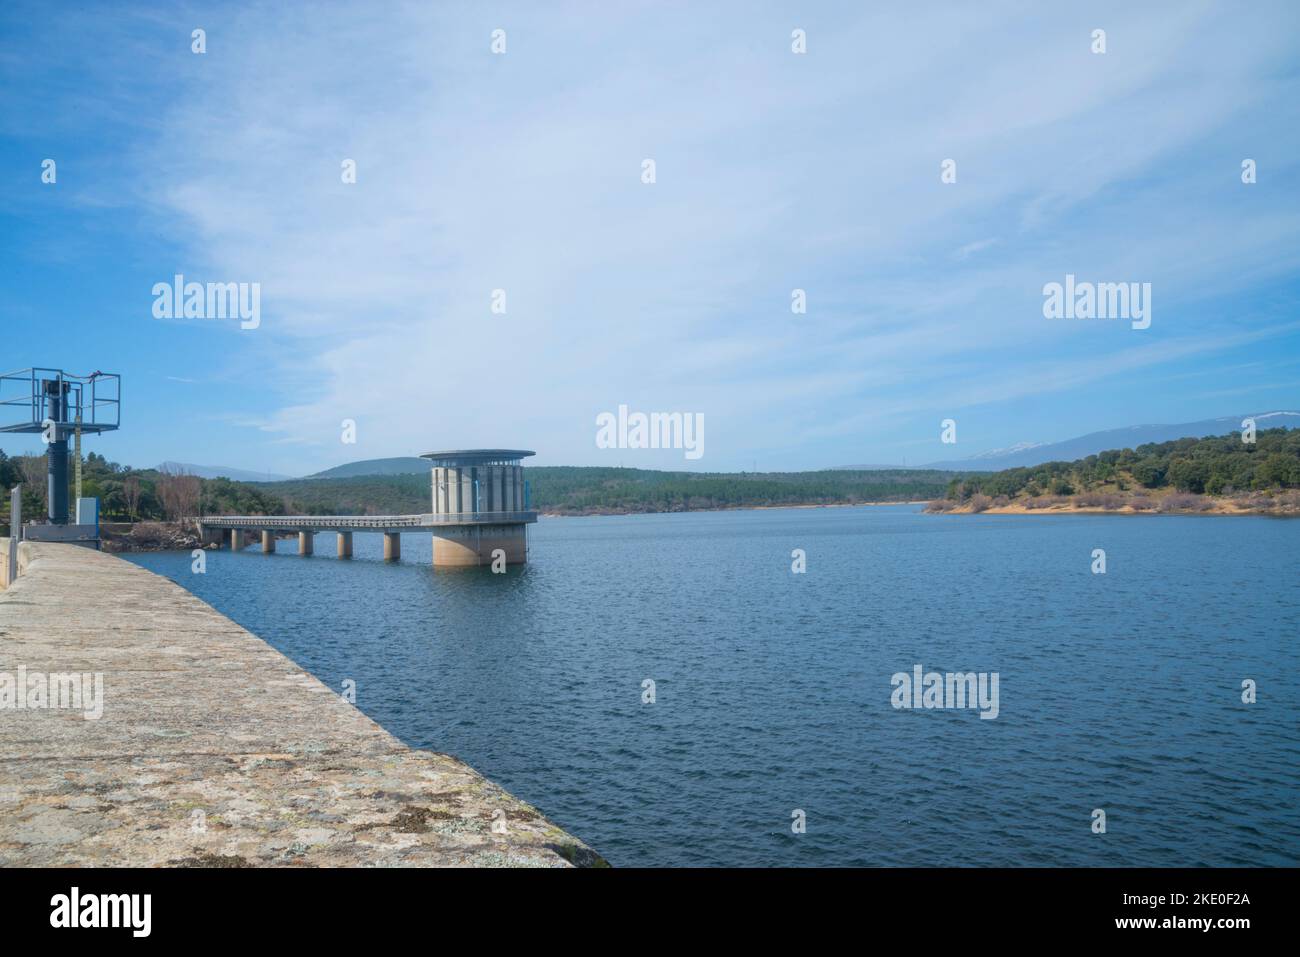 Puentes Viejas reservoir, Madrid province, Spain. Stock Photo